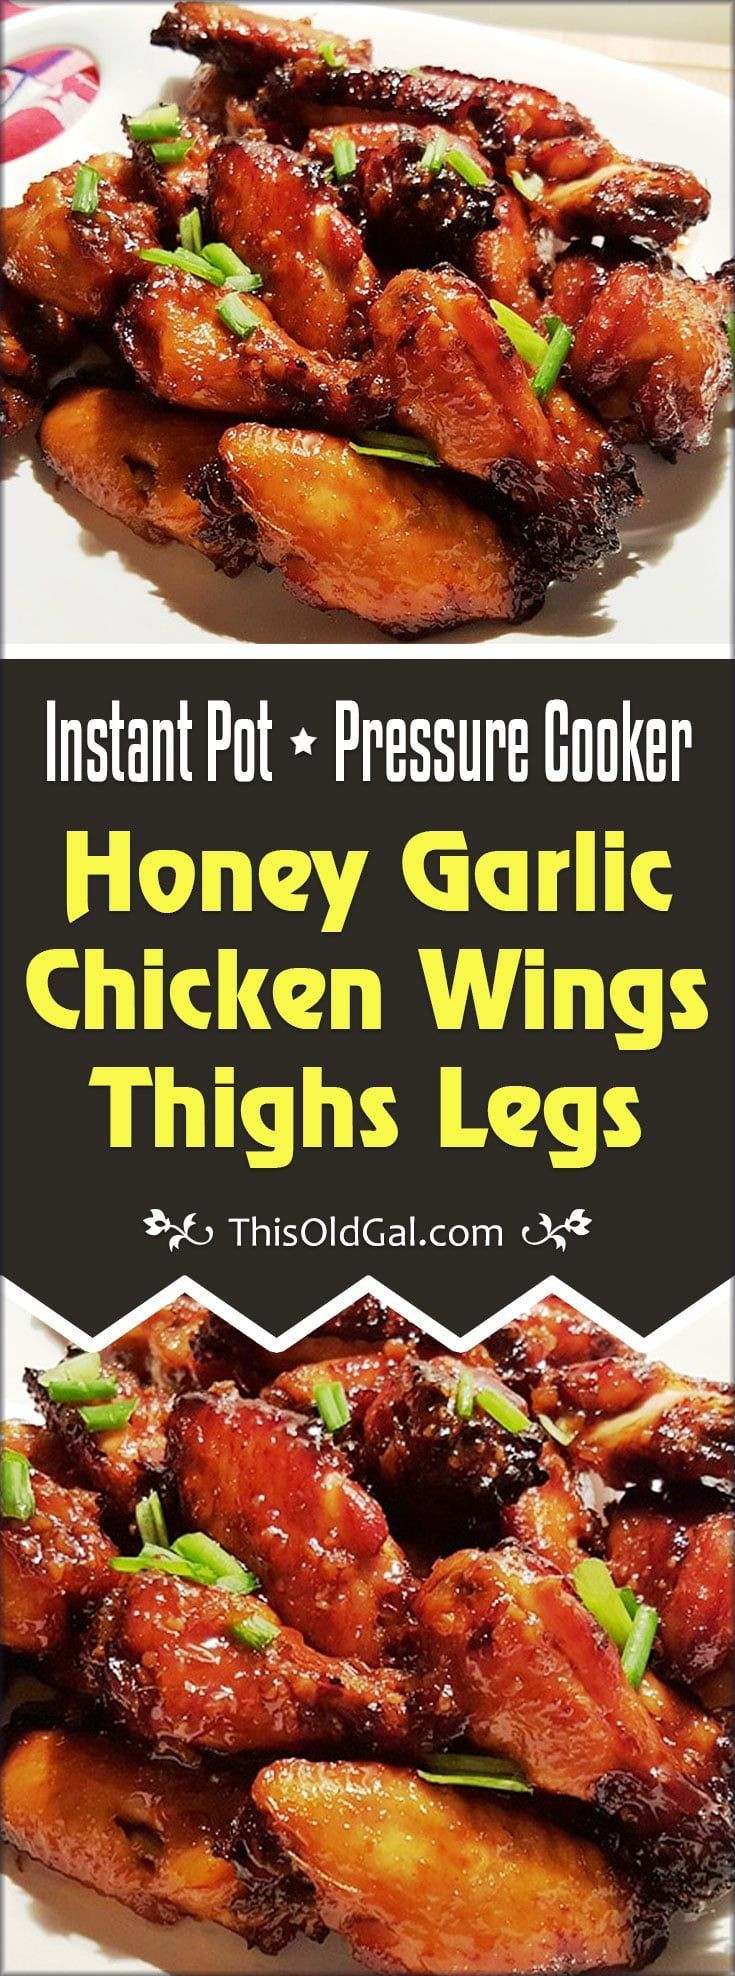 Pressure Cooker Chicken Wings
 coca cola chicken wings pressure cooker